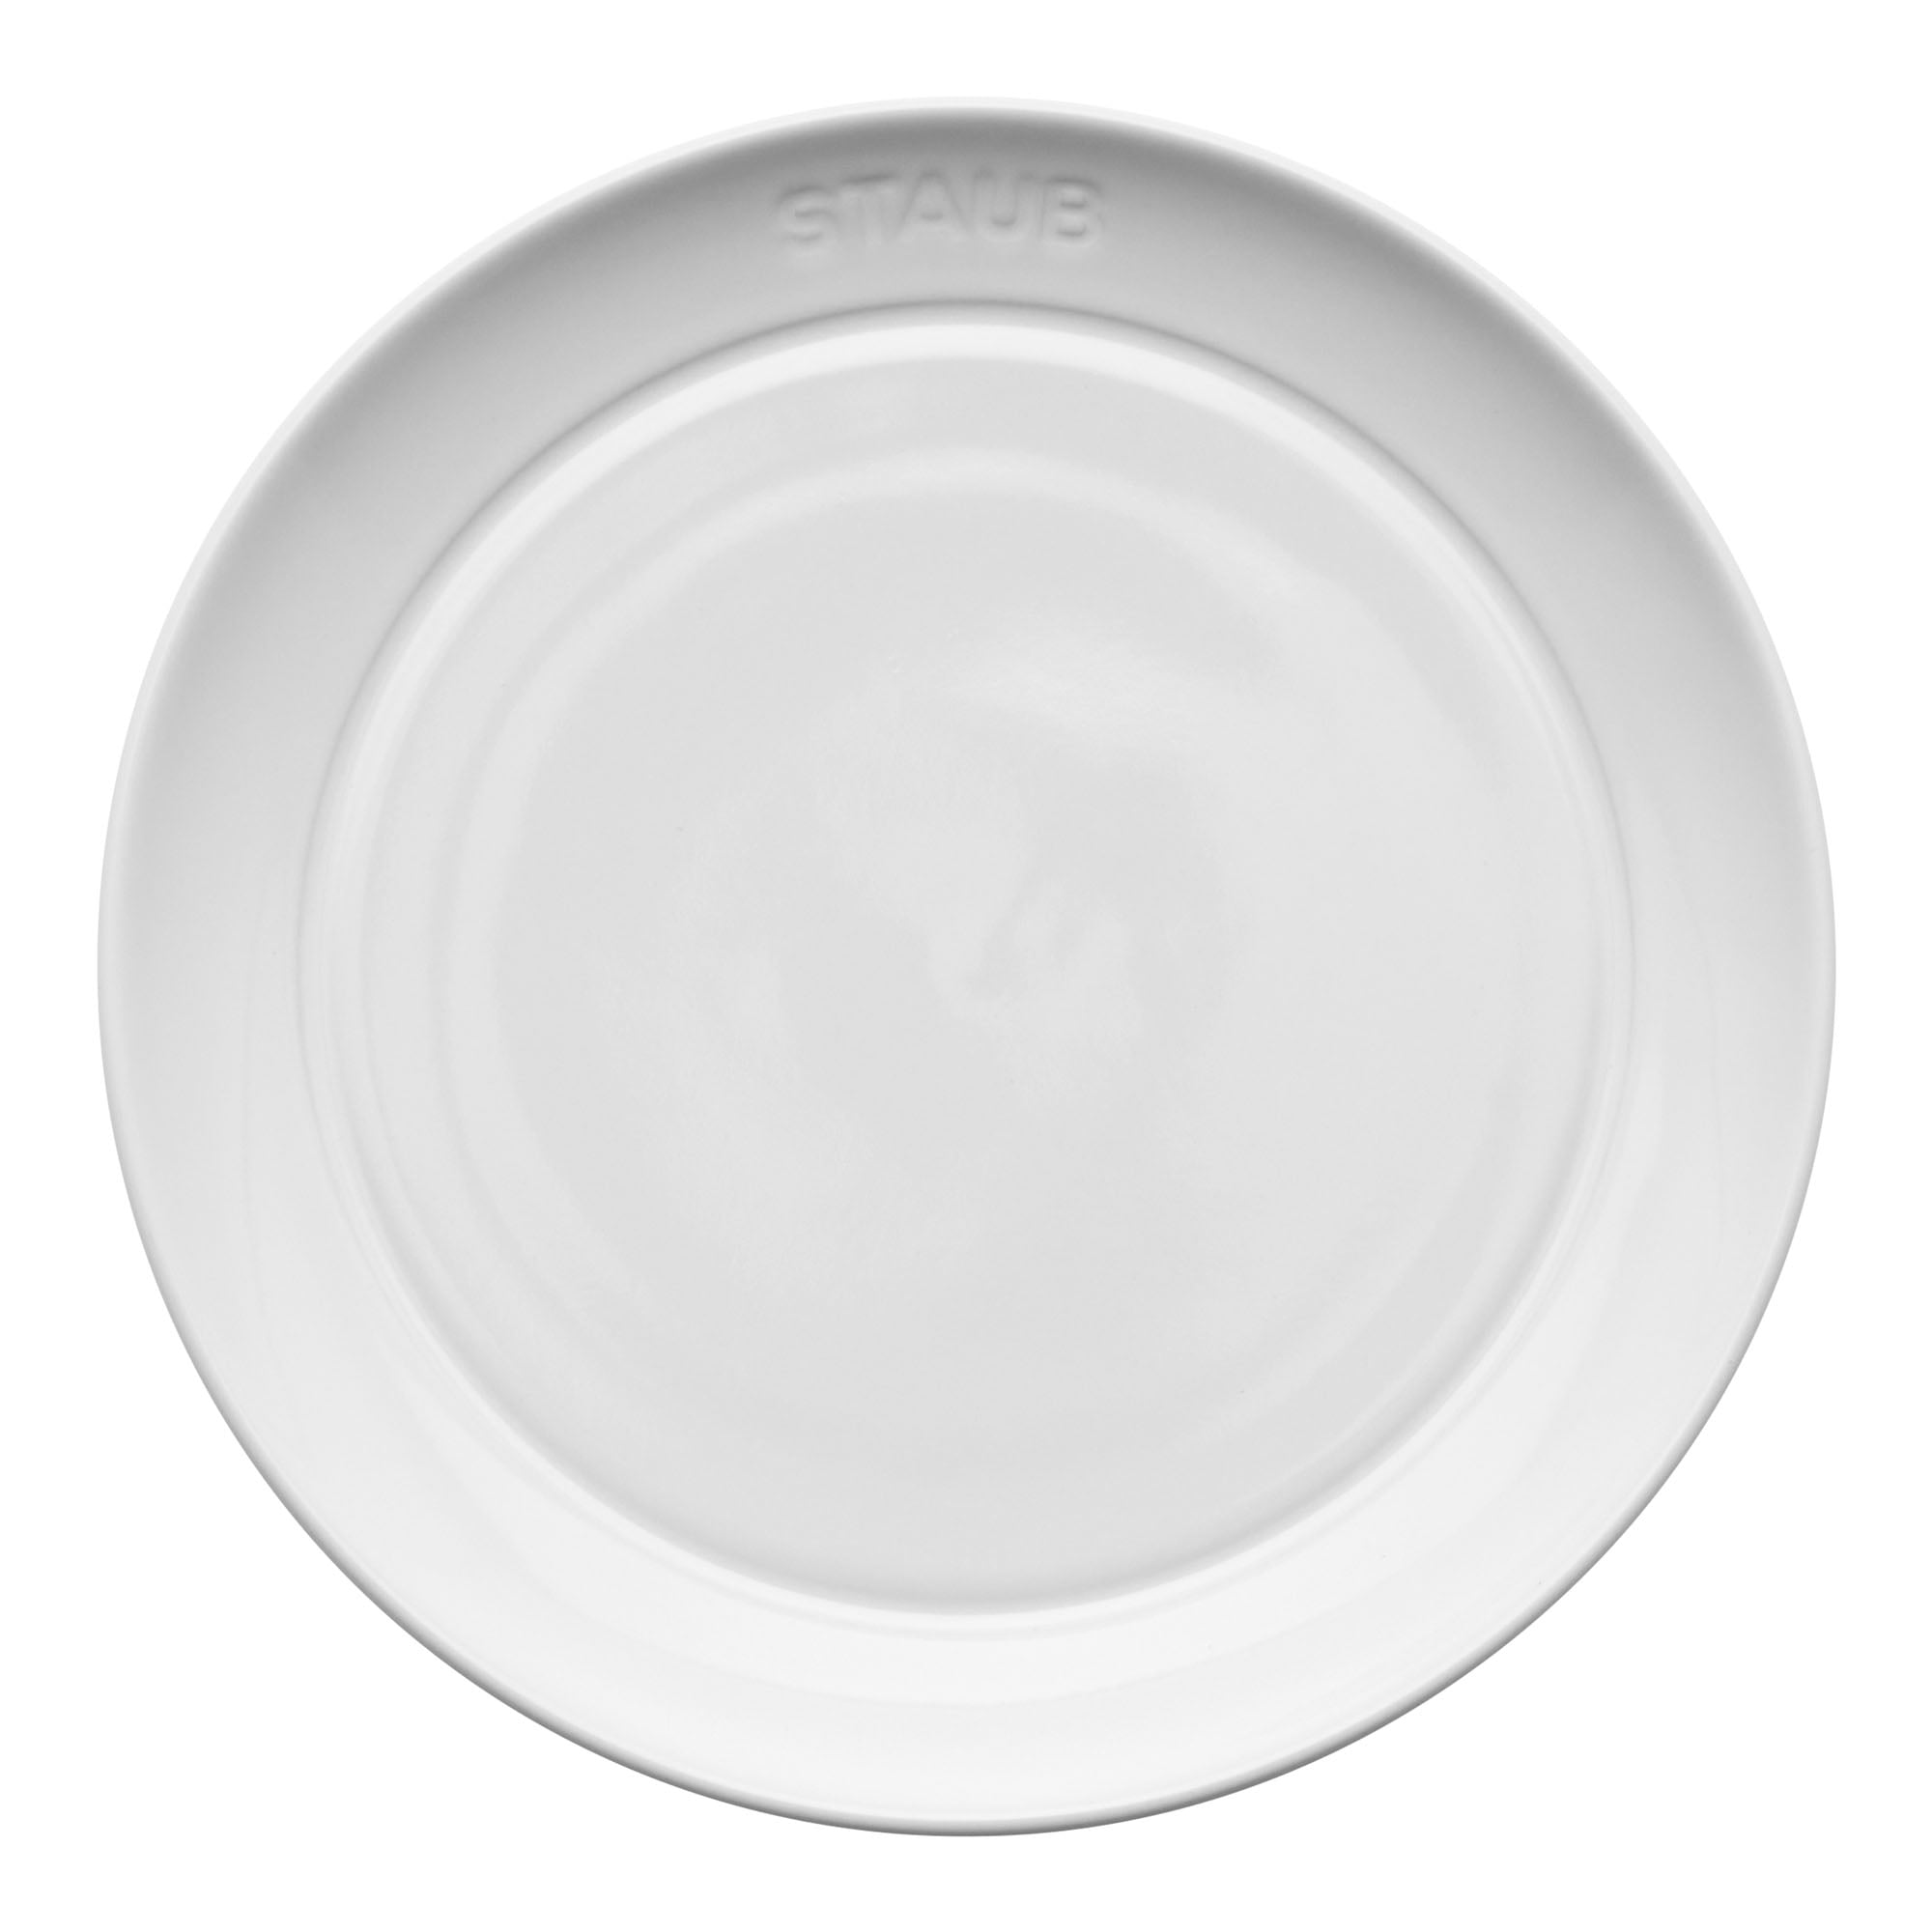 Staub Ceramic Dinnerware 4-pc 6-inch Appetizer Plate Set - White Truffle 